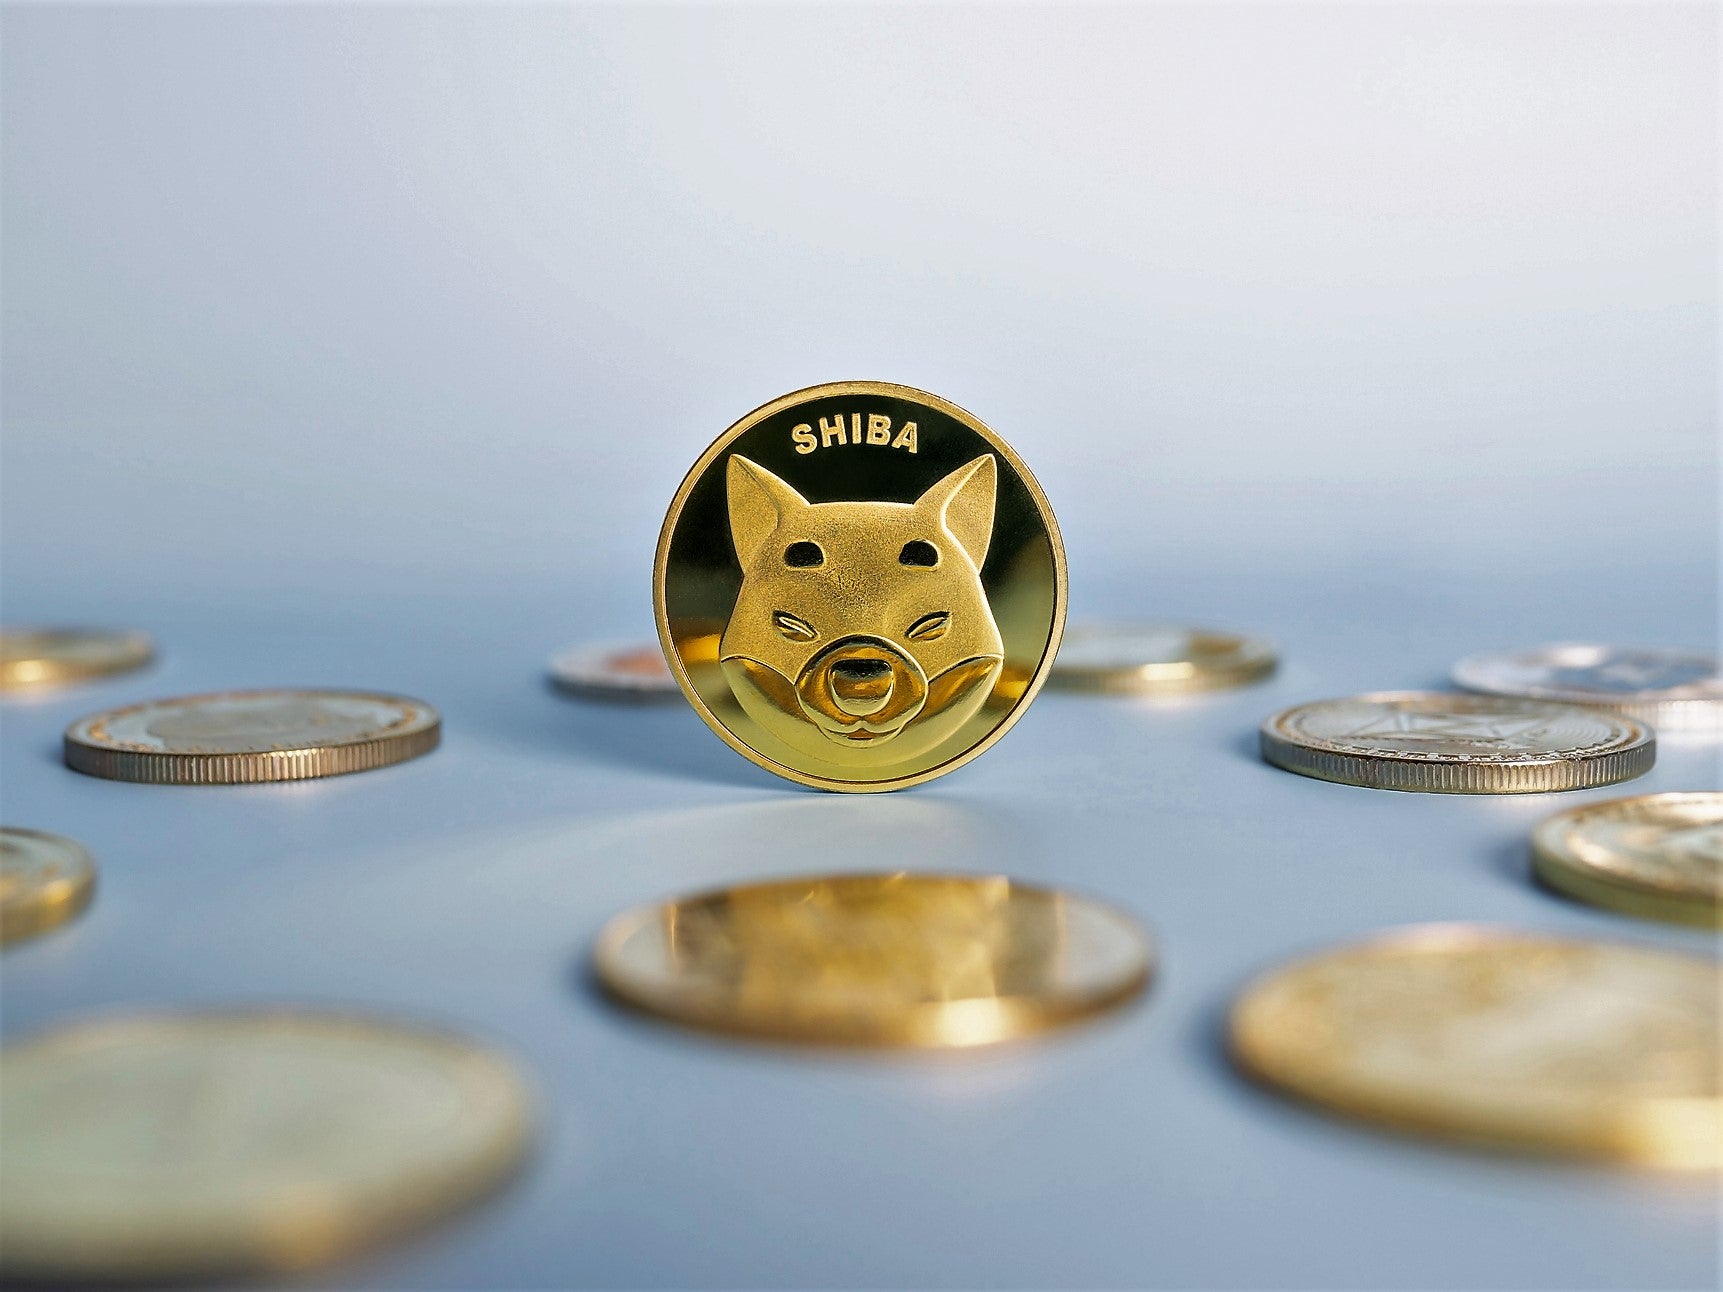 shiba inu coin market cap at 1 cent